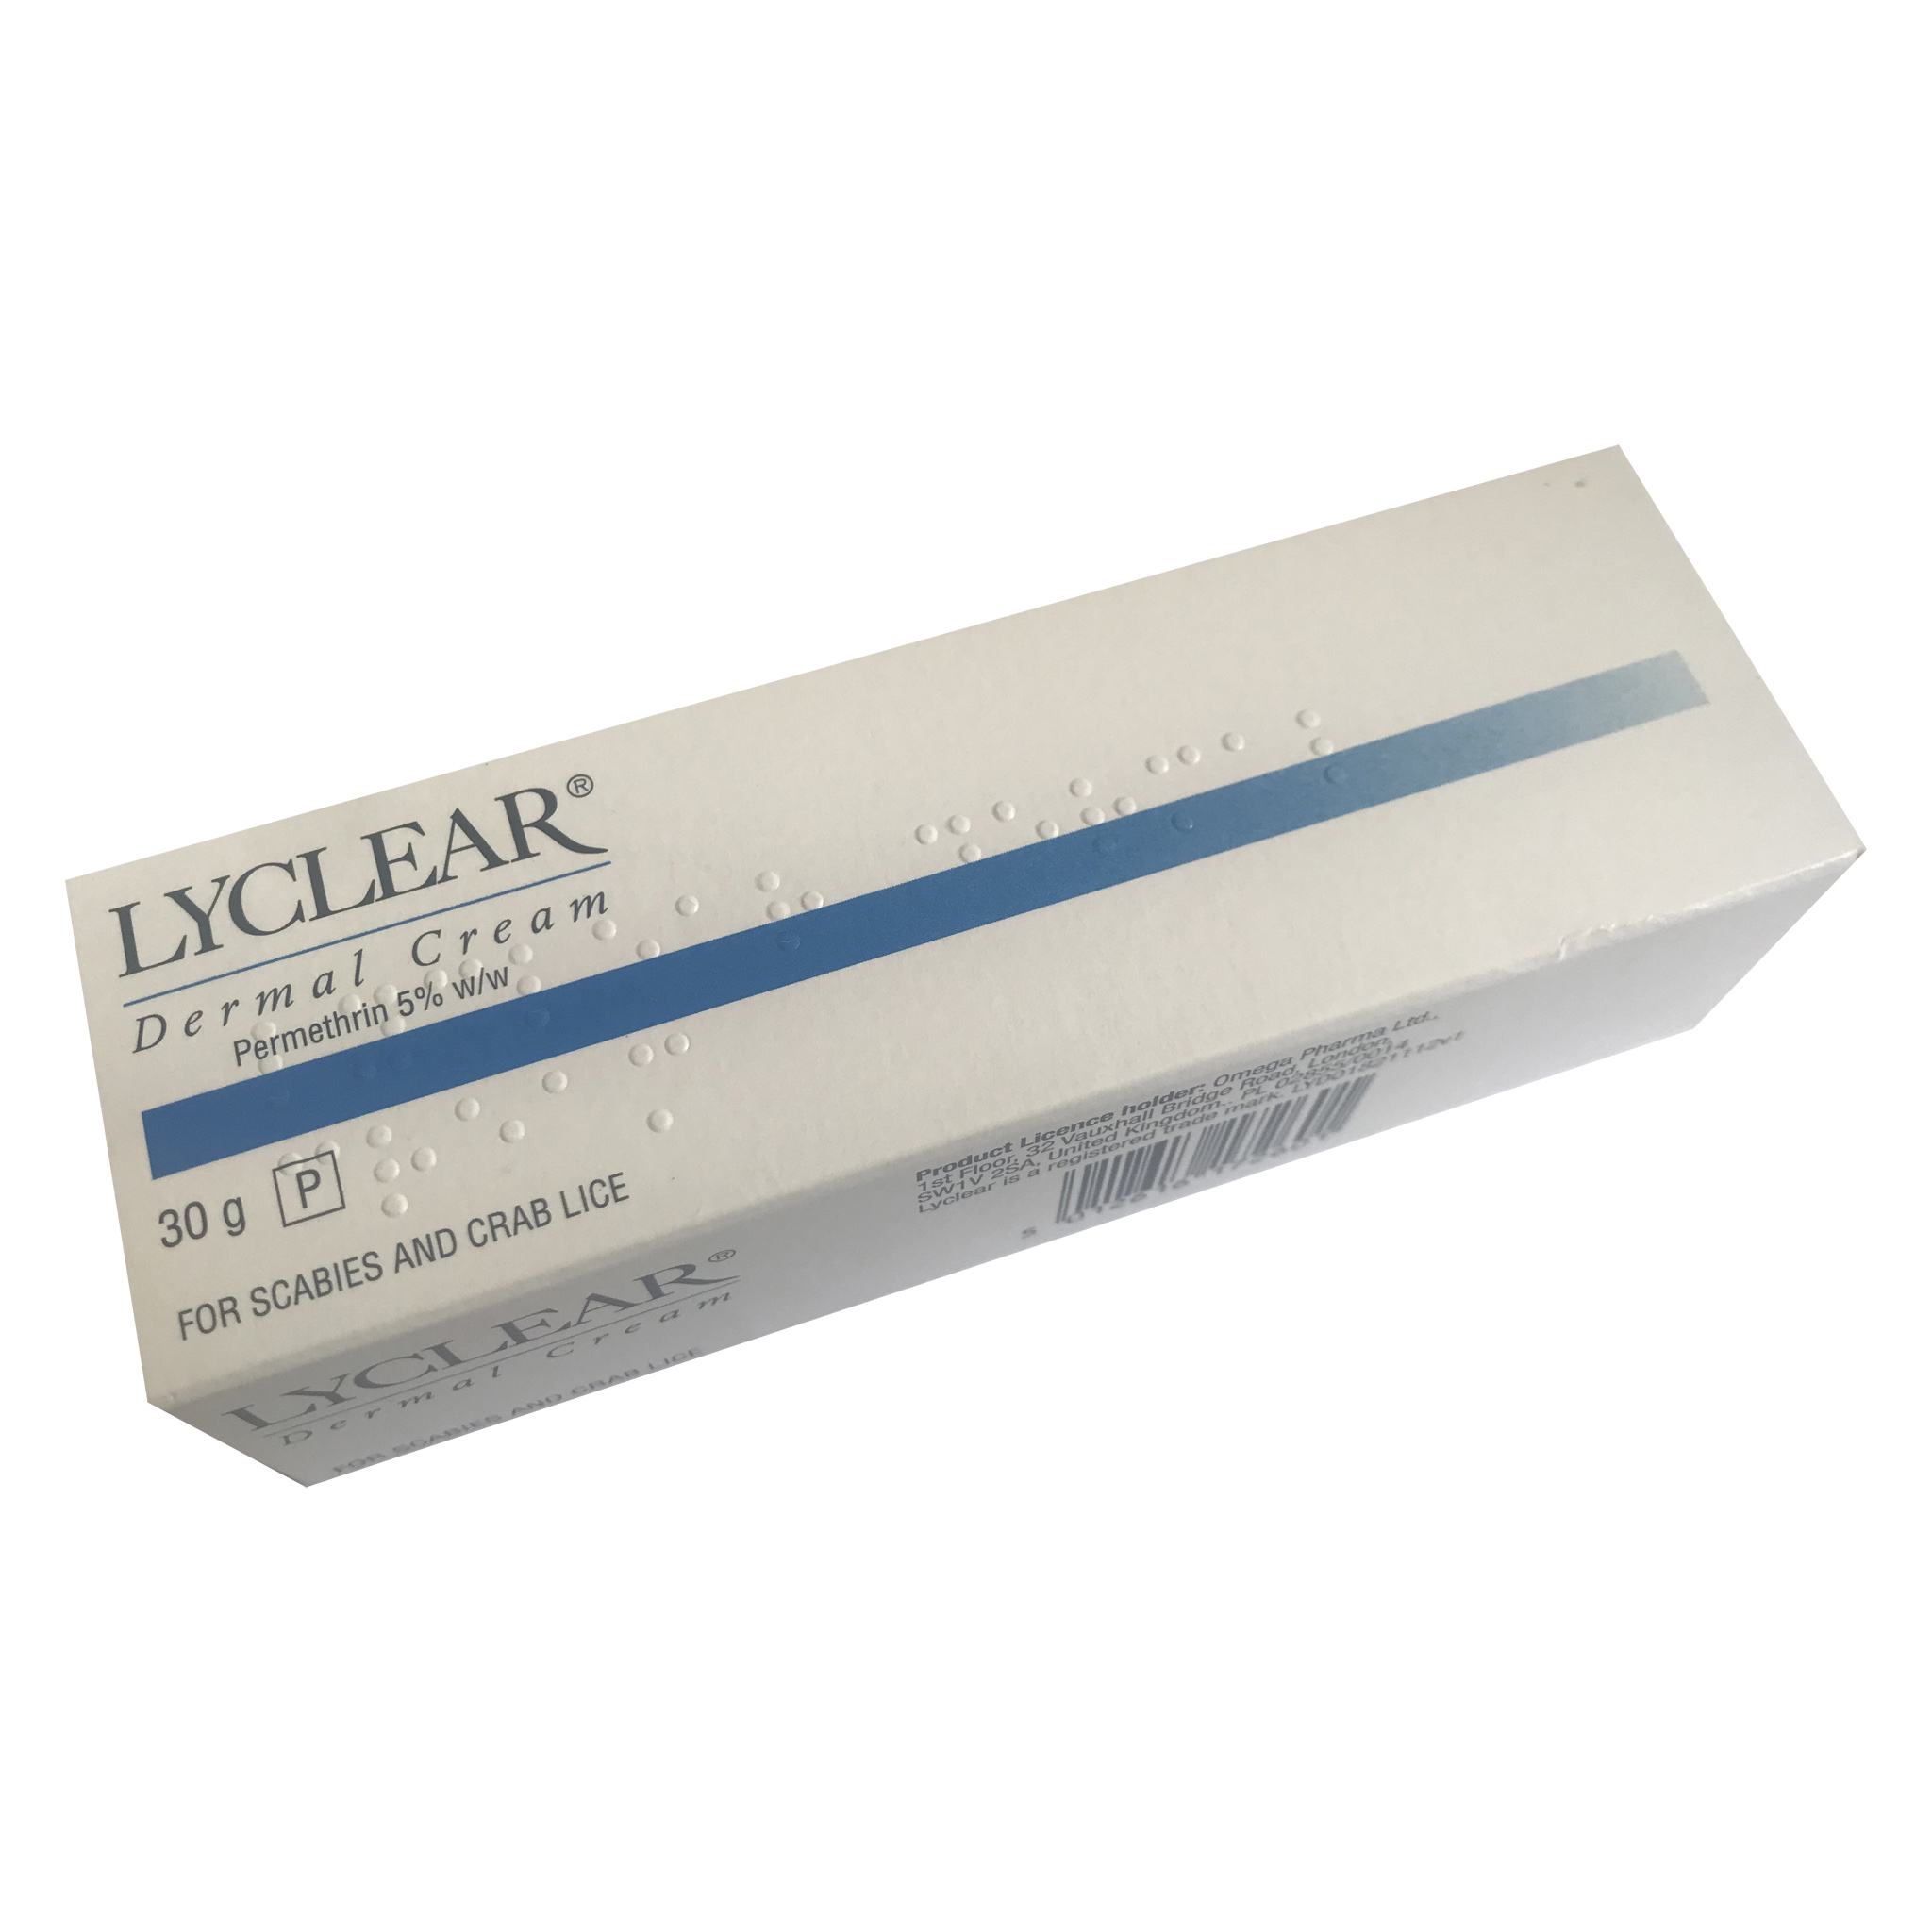 Lyclear Dermal Cream (30g) - 8 Packs